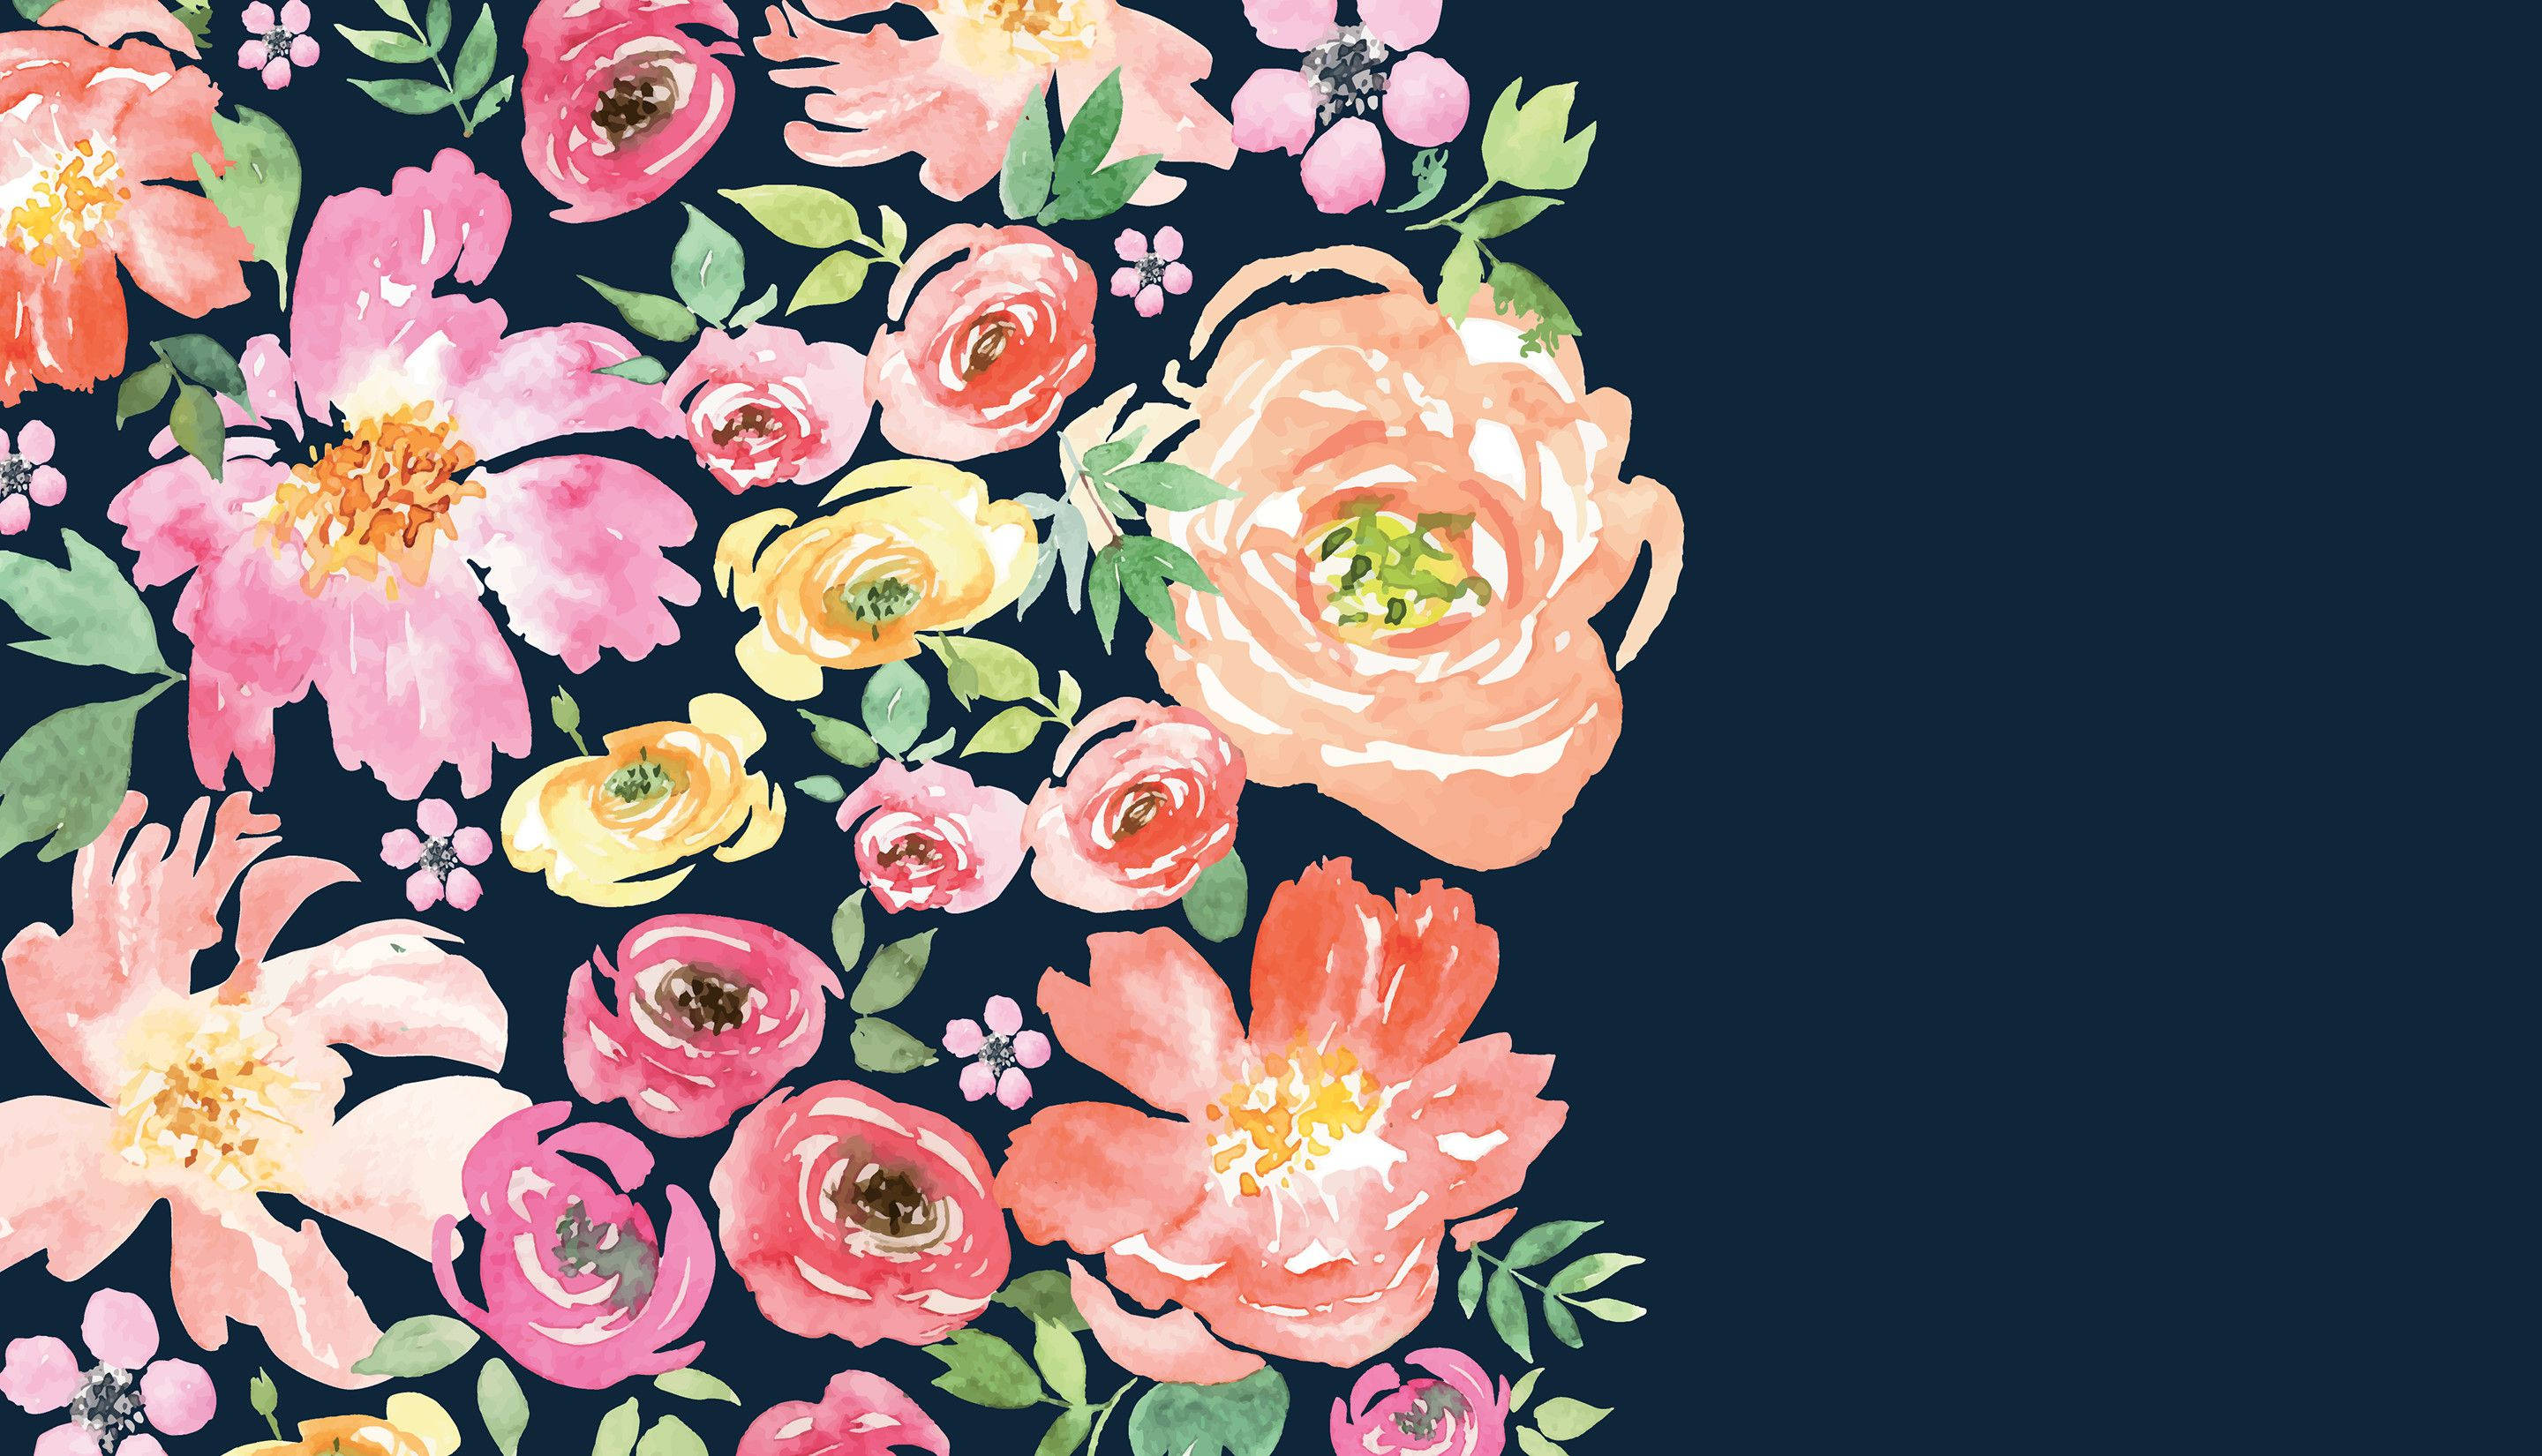 Colorful Floral Desktop Artwork Wallpaper